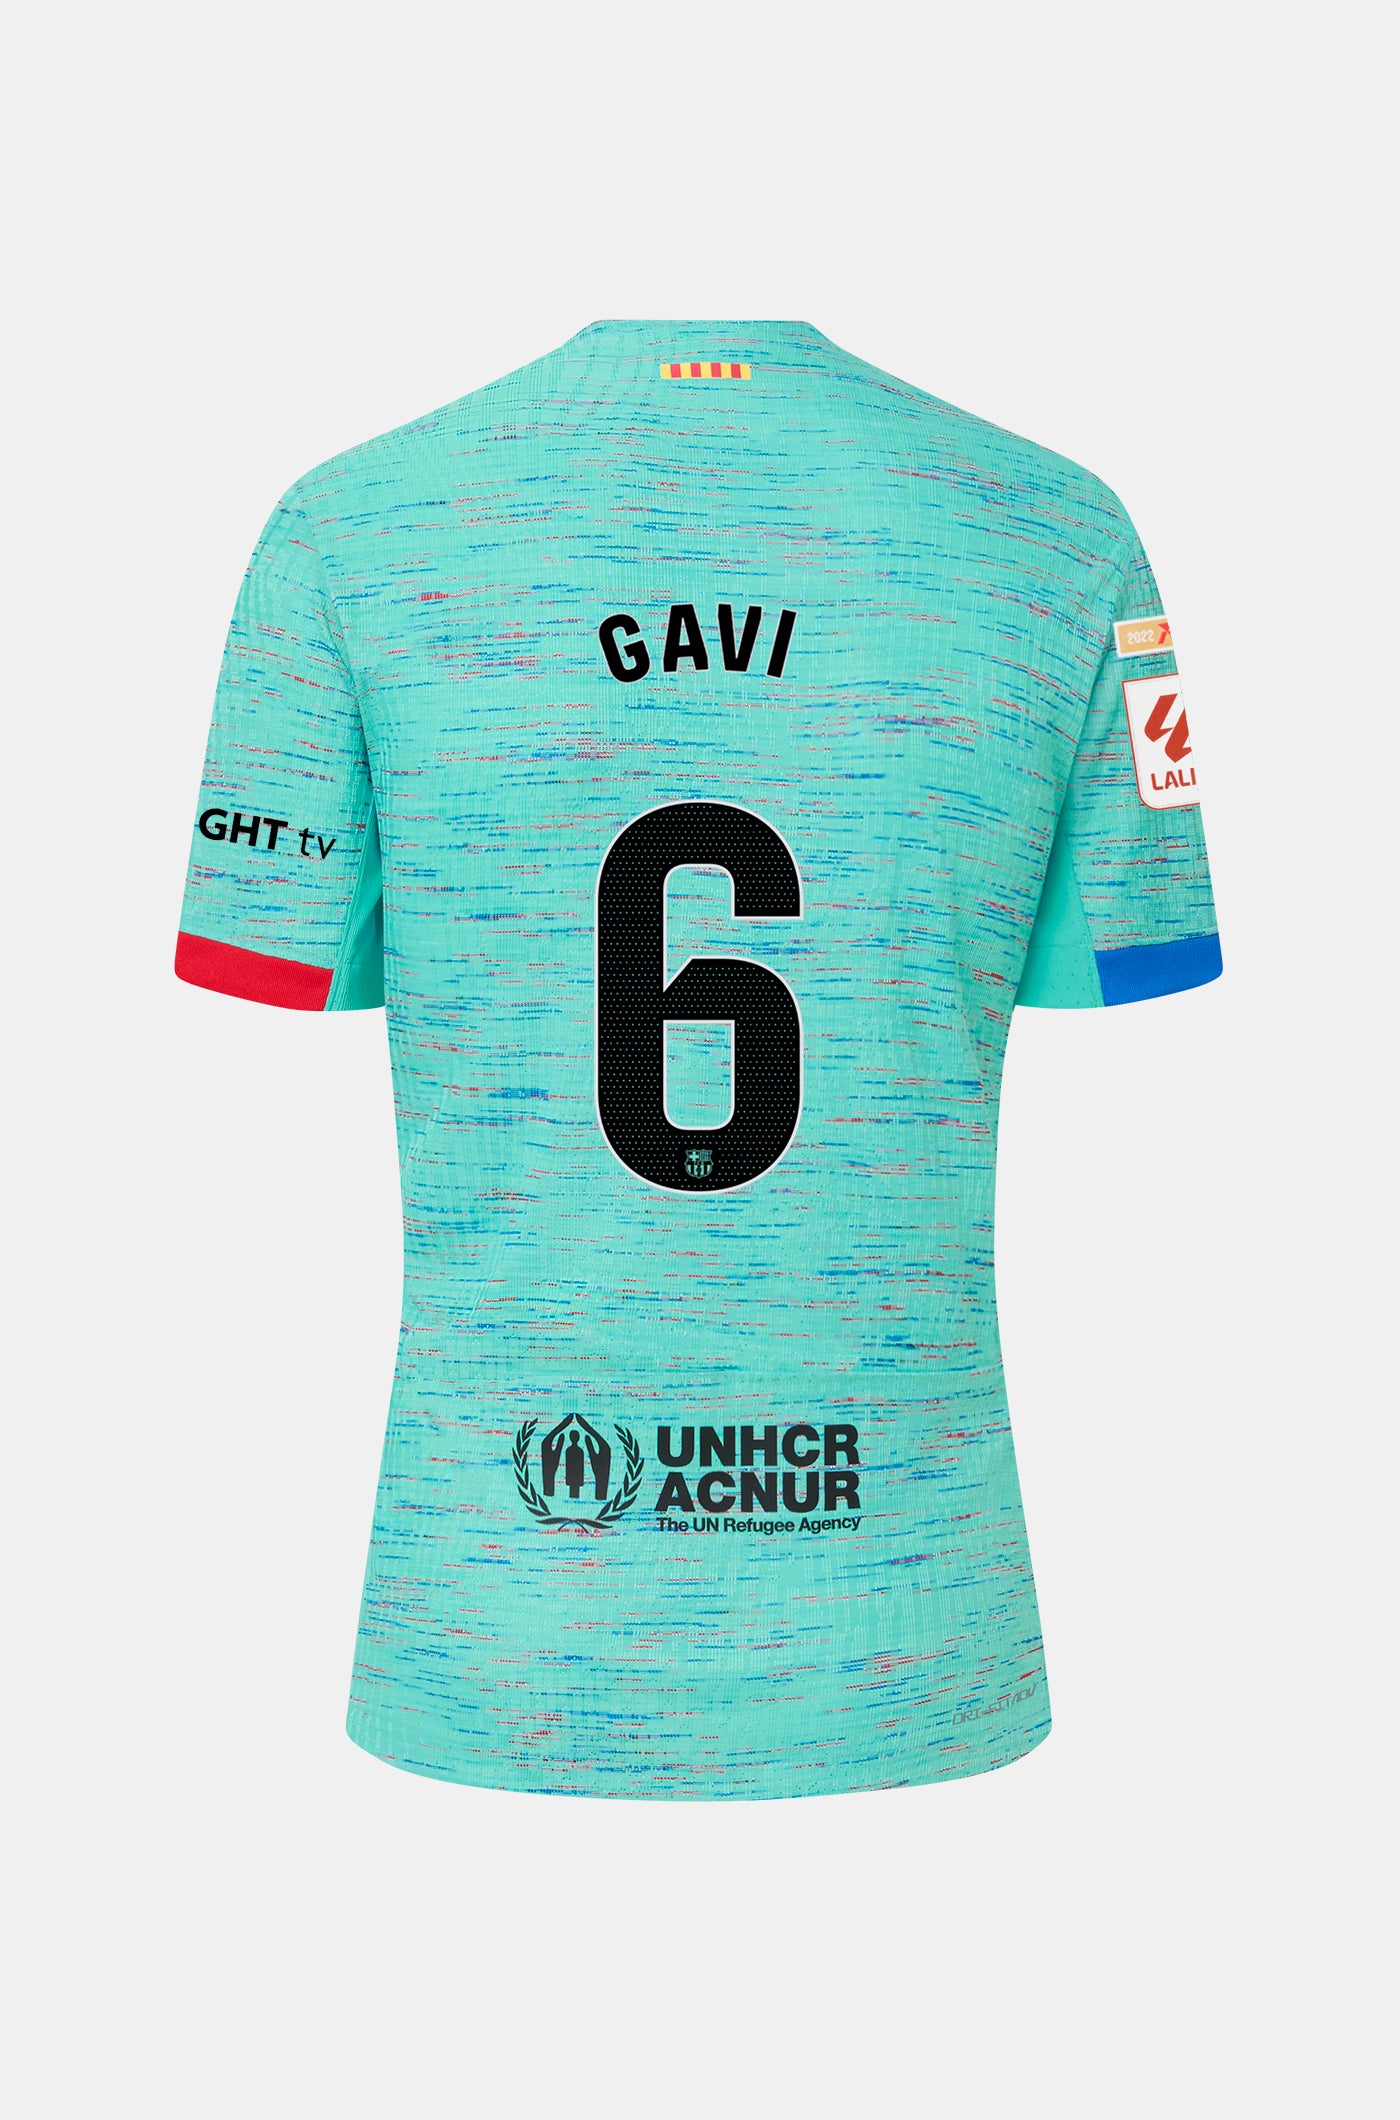 LFP FC Barcelona third shirt 23/24 Player’s Edition  - GAVI